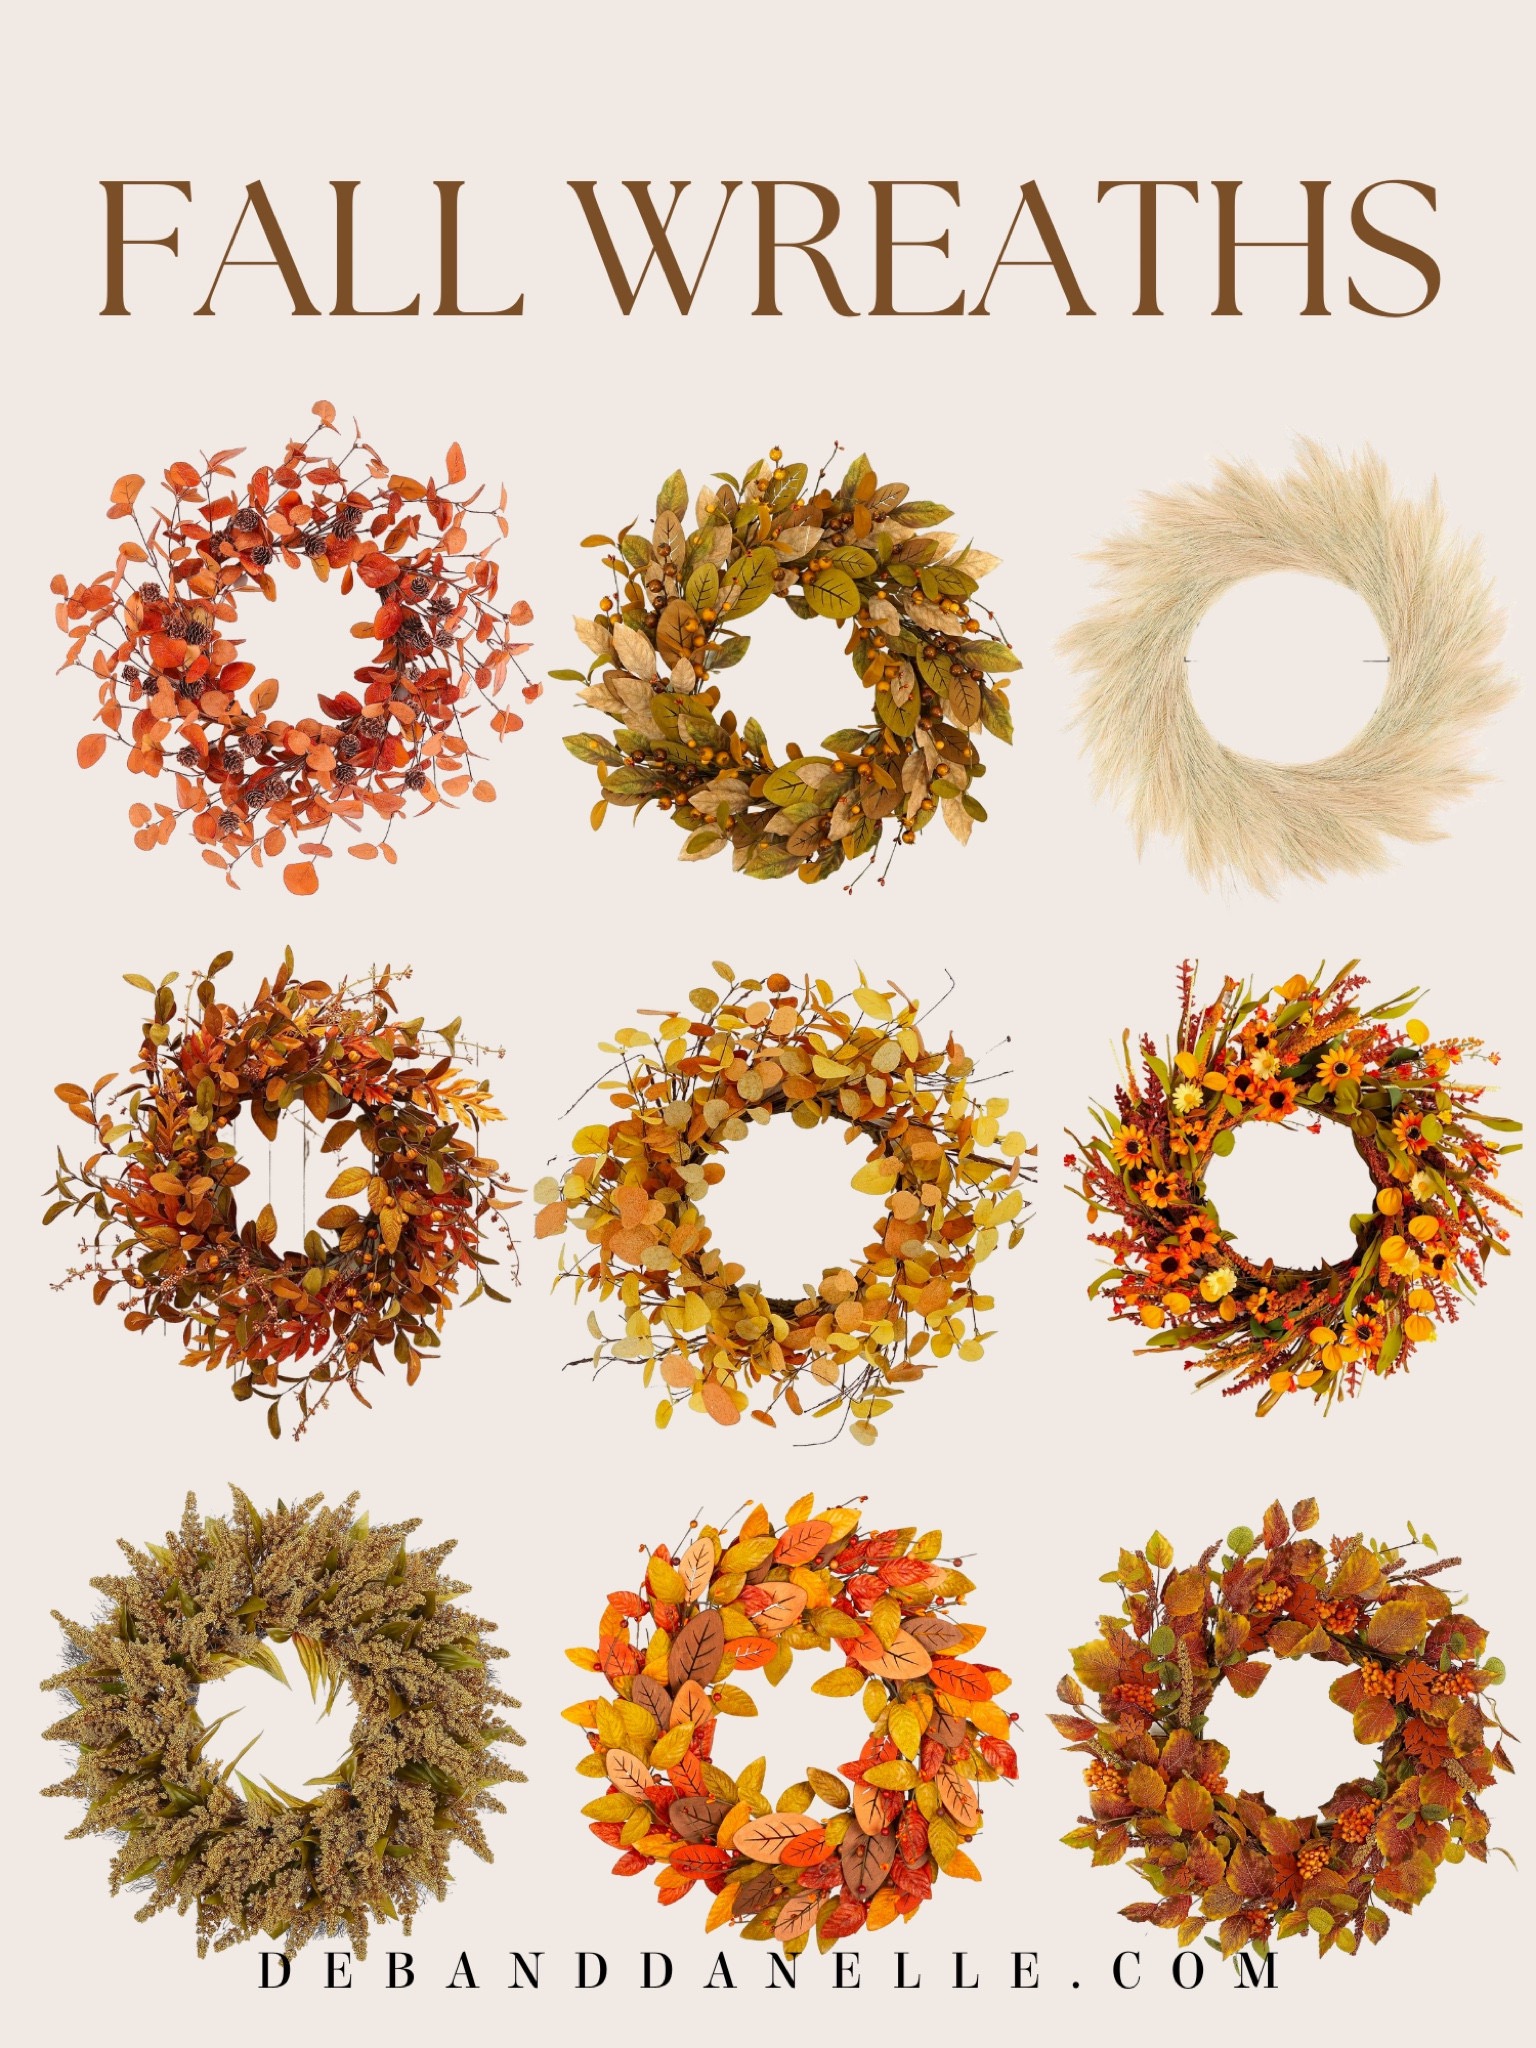 Fall wreaths